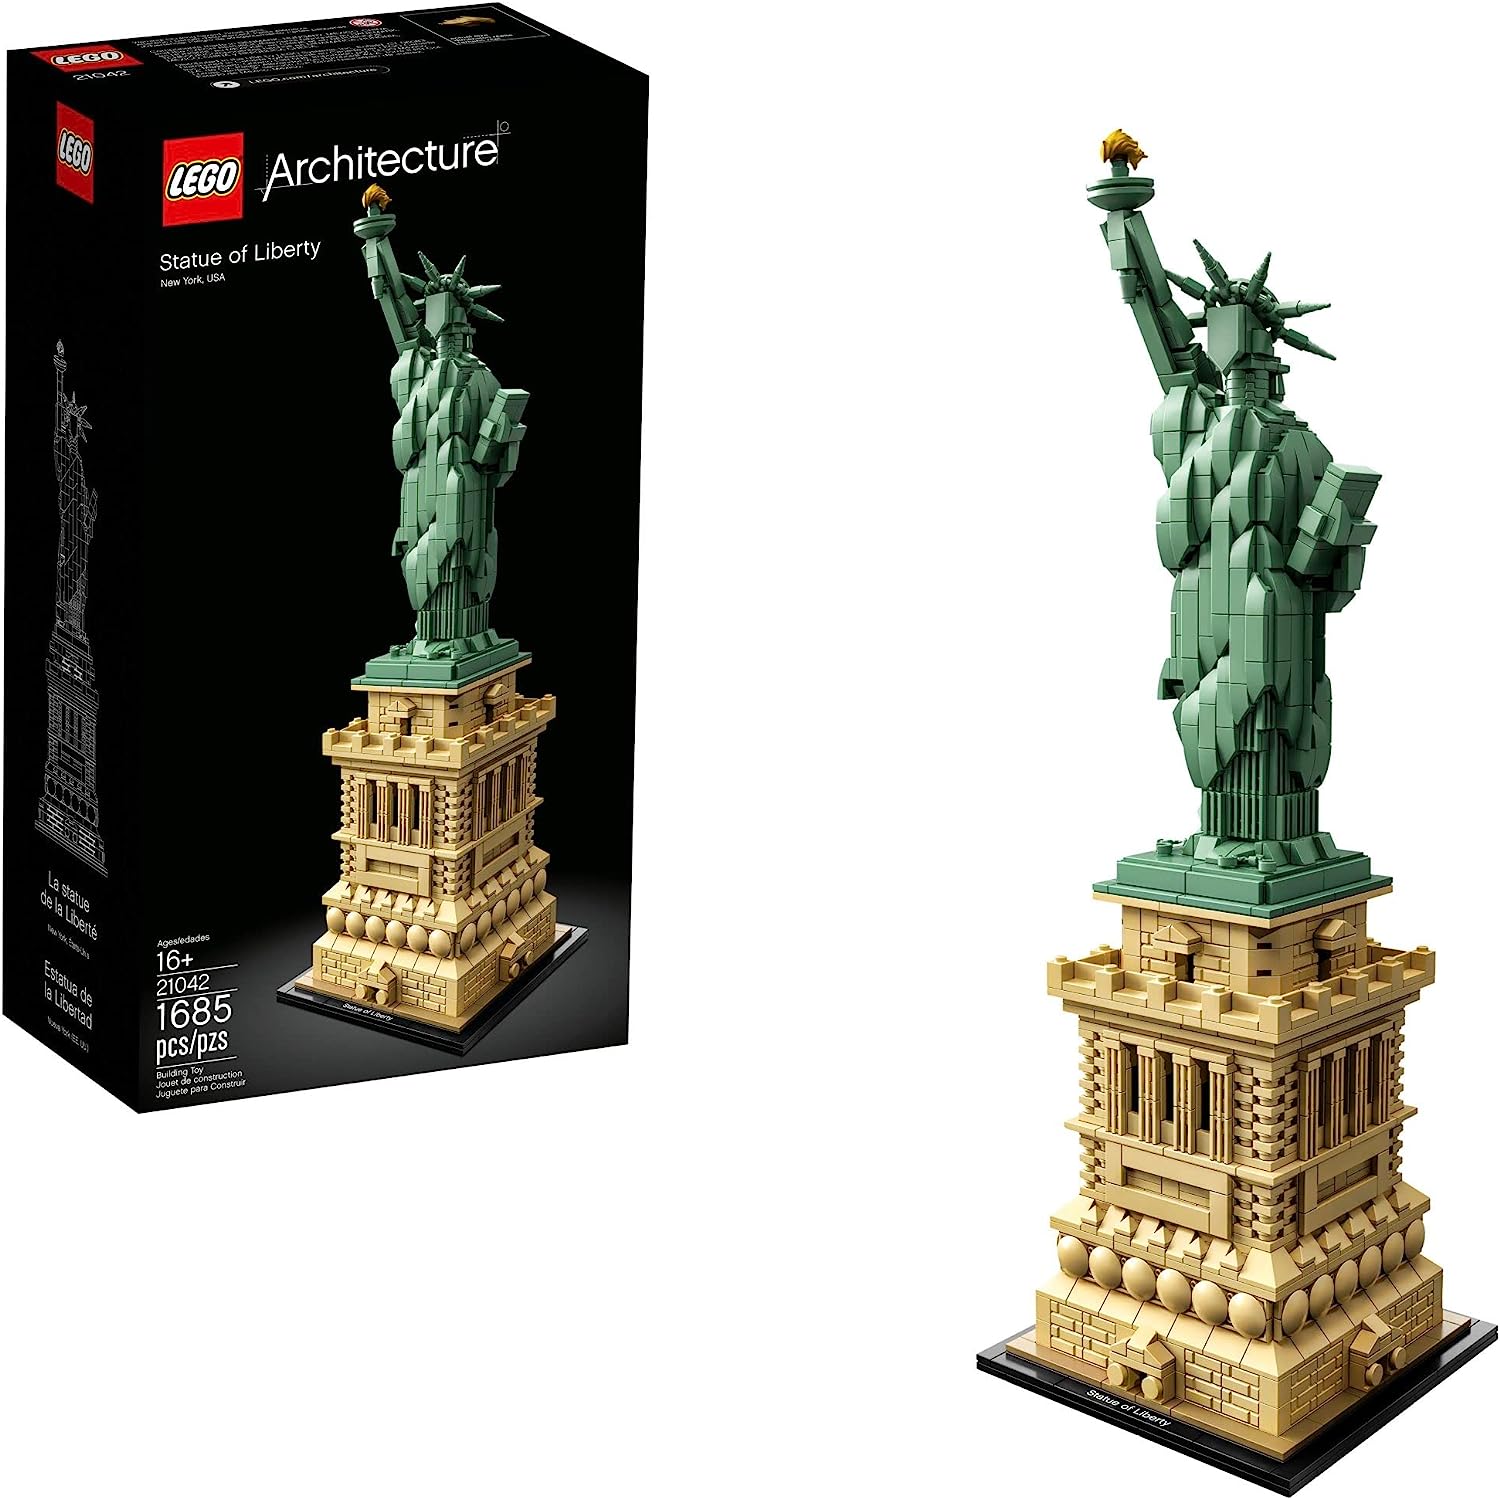 LEGO Architecture Statue of Liberty 21042 Model [...]